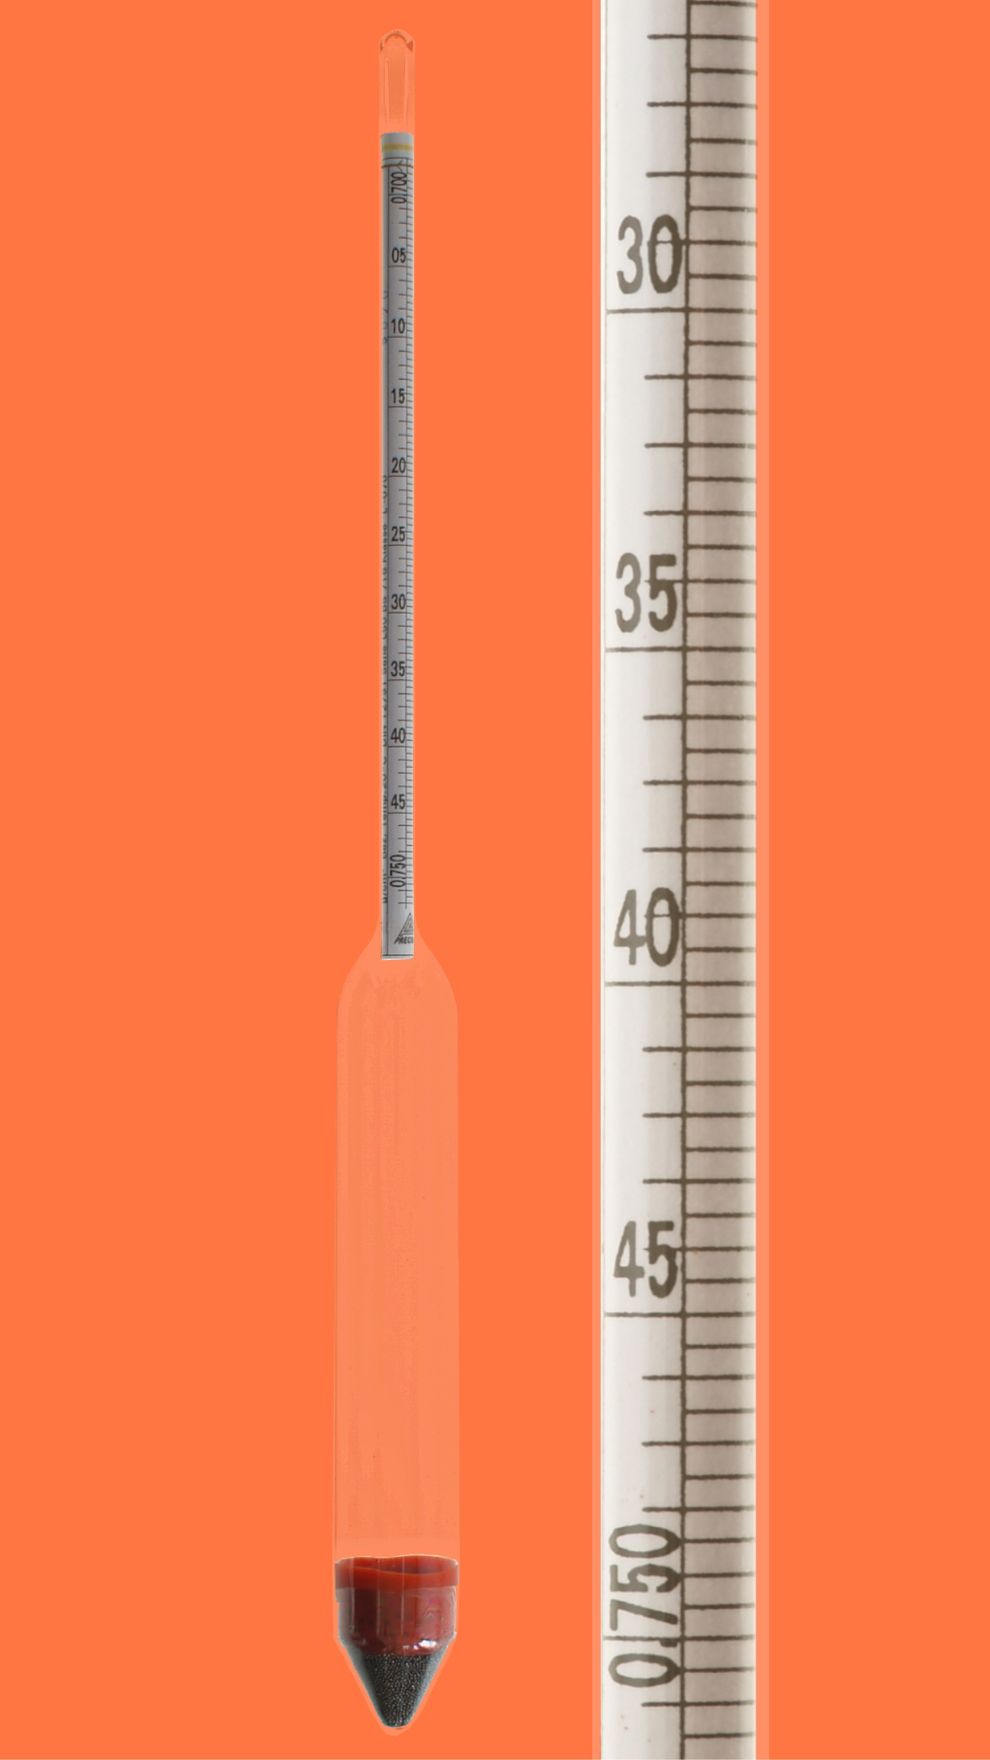 Aräometer, DIN 12791, L50, 1,45-1,50:0,0005g/cm³, Bezugstemp. 20°C, ohne Thermometer